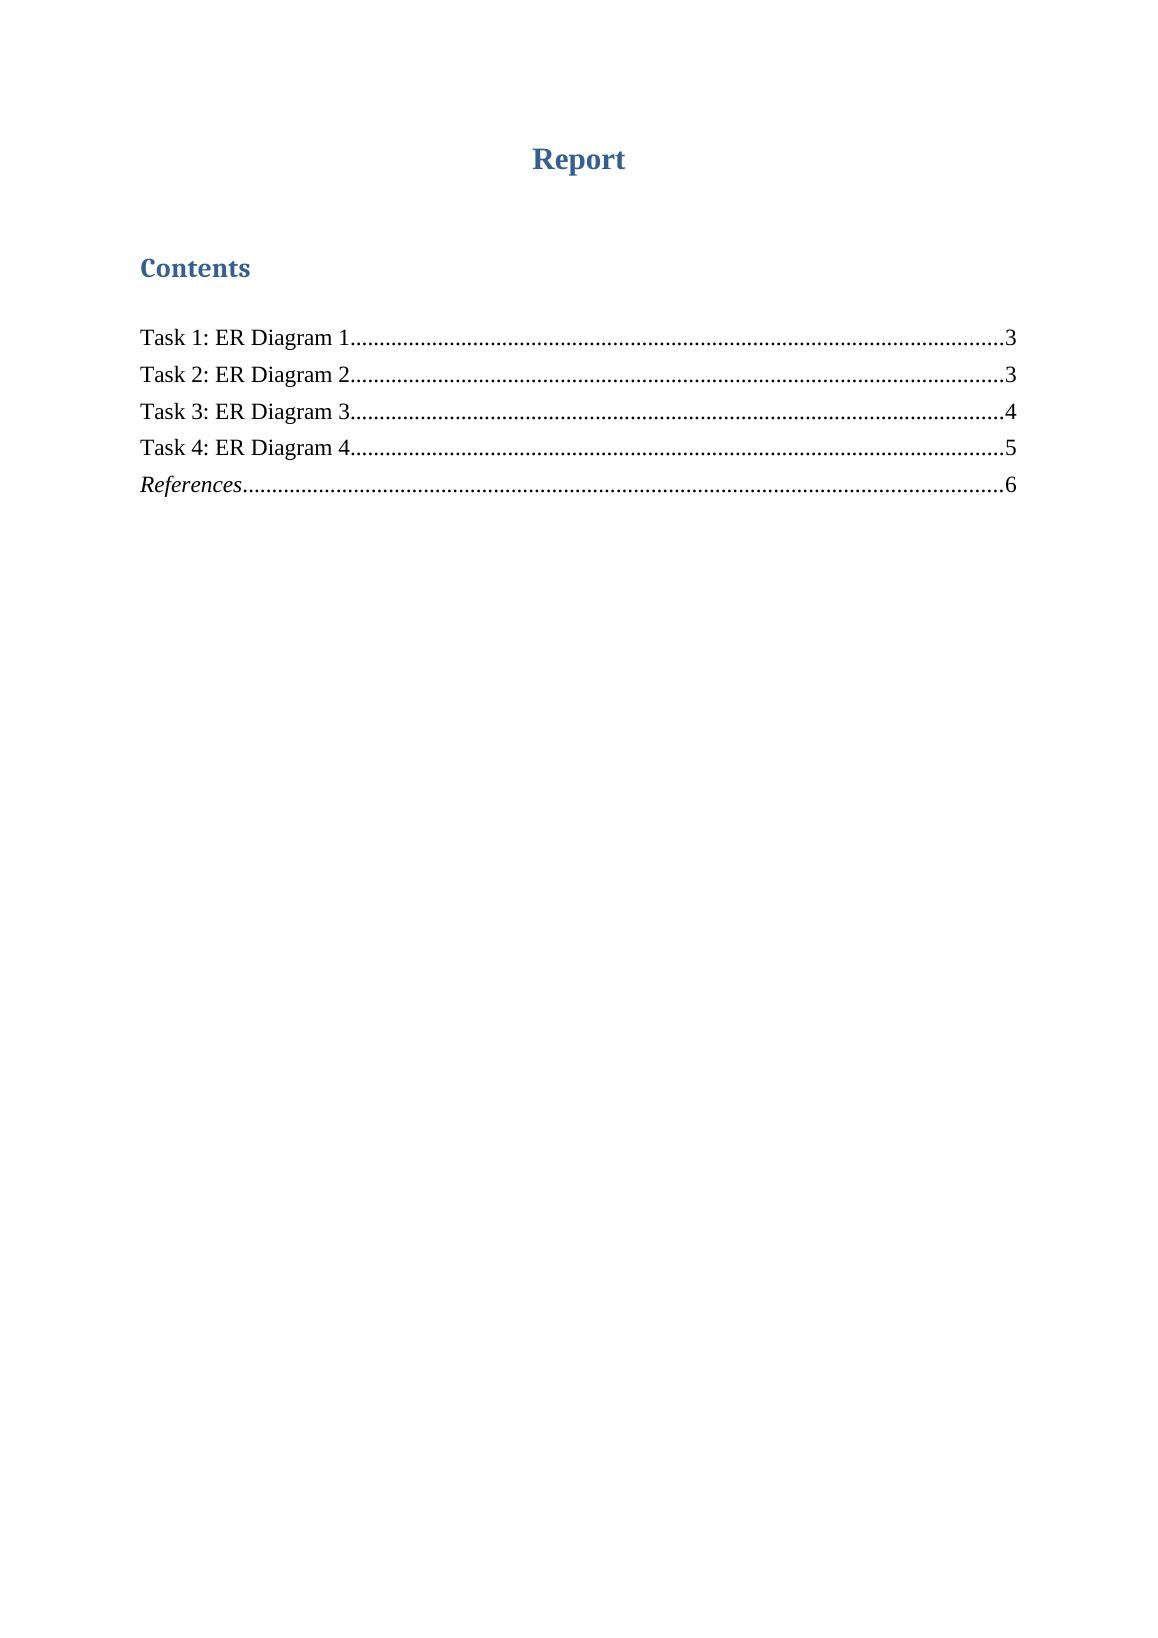 31061 - Business Case - Database Report on ER Diagram_2